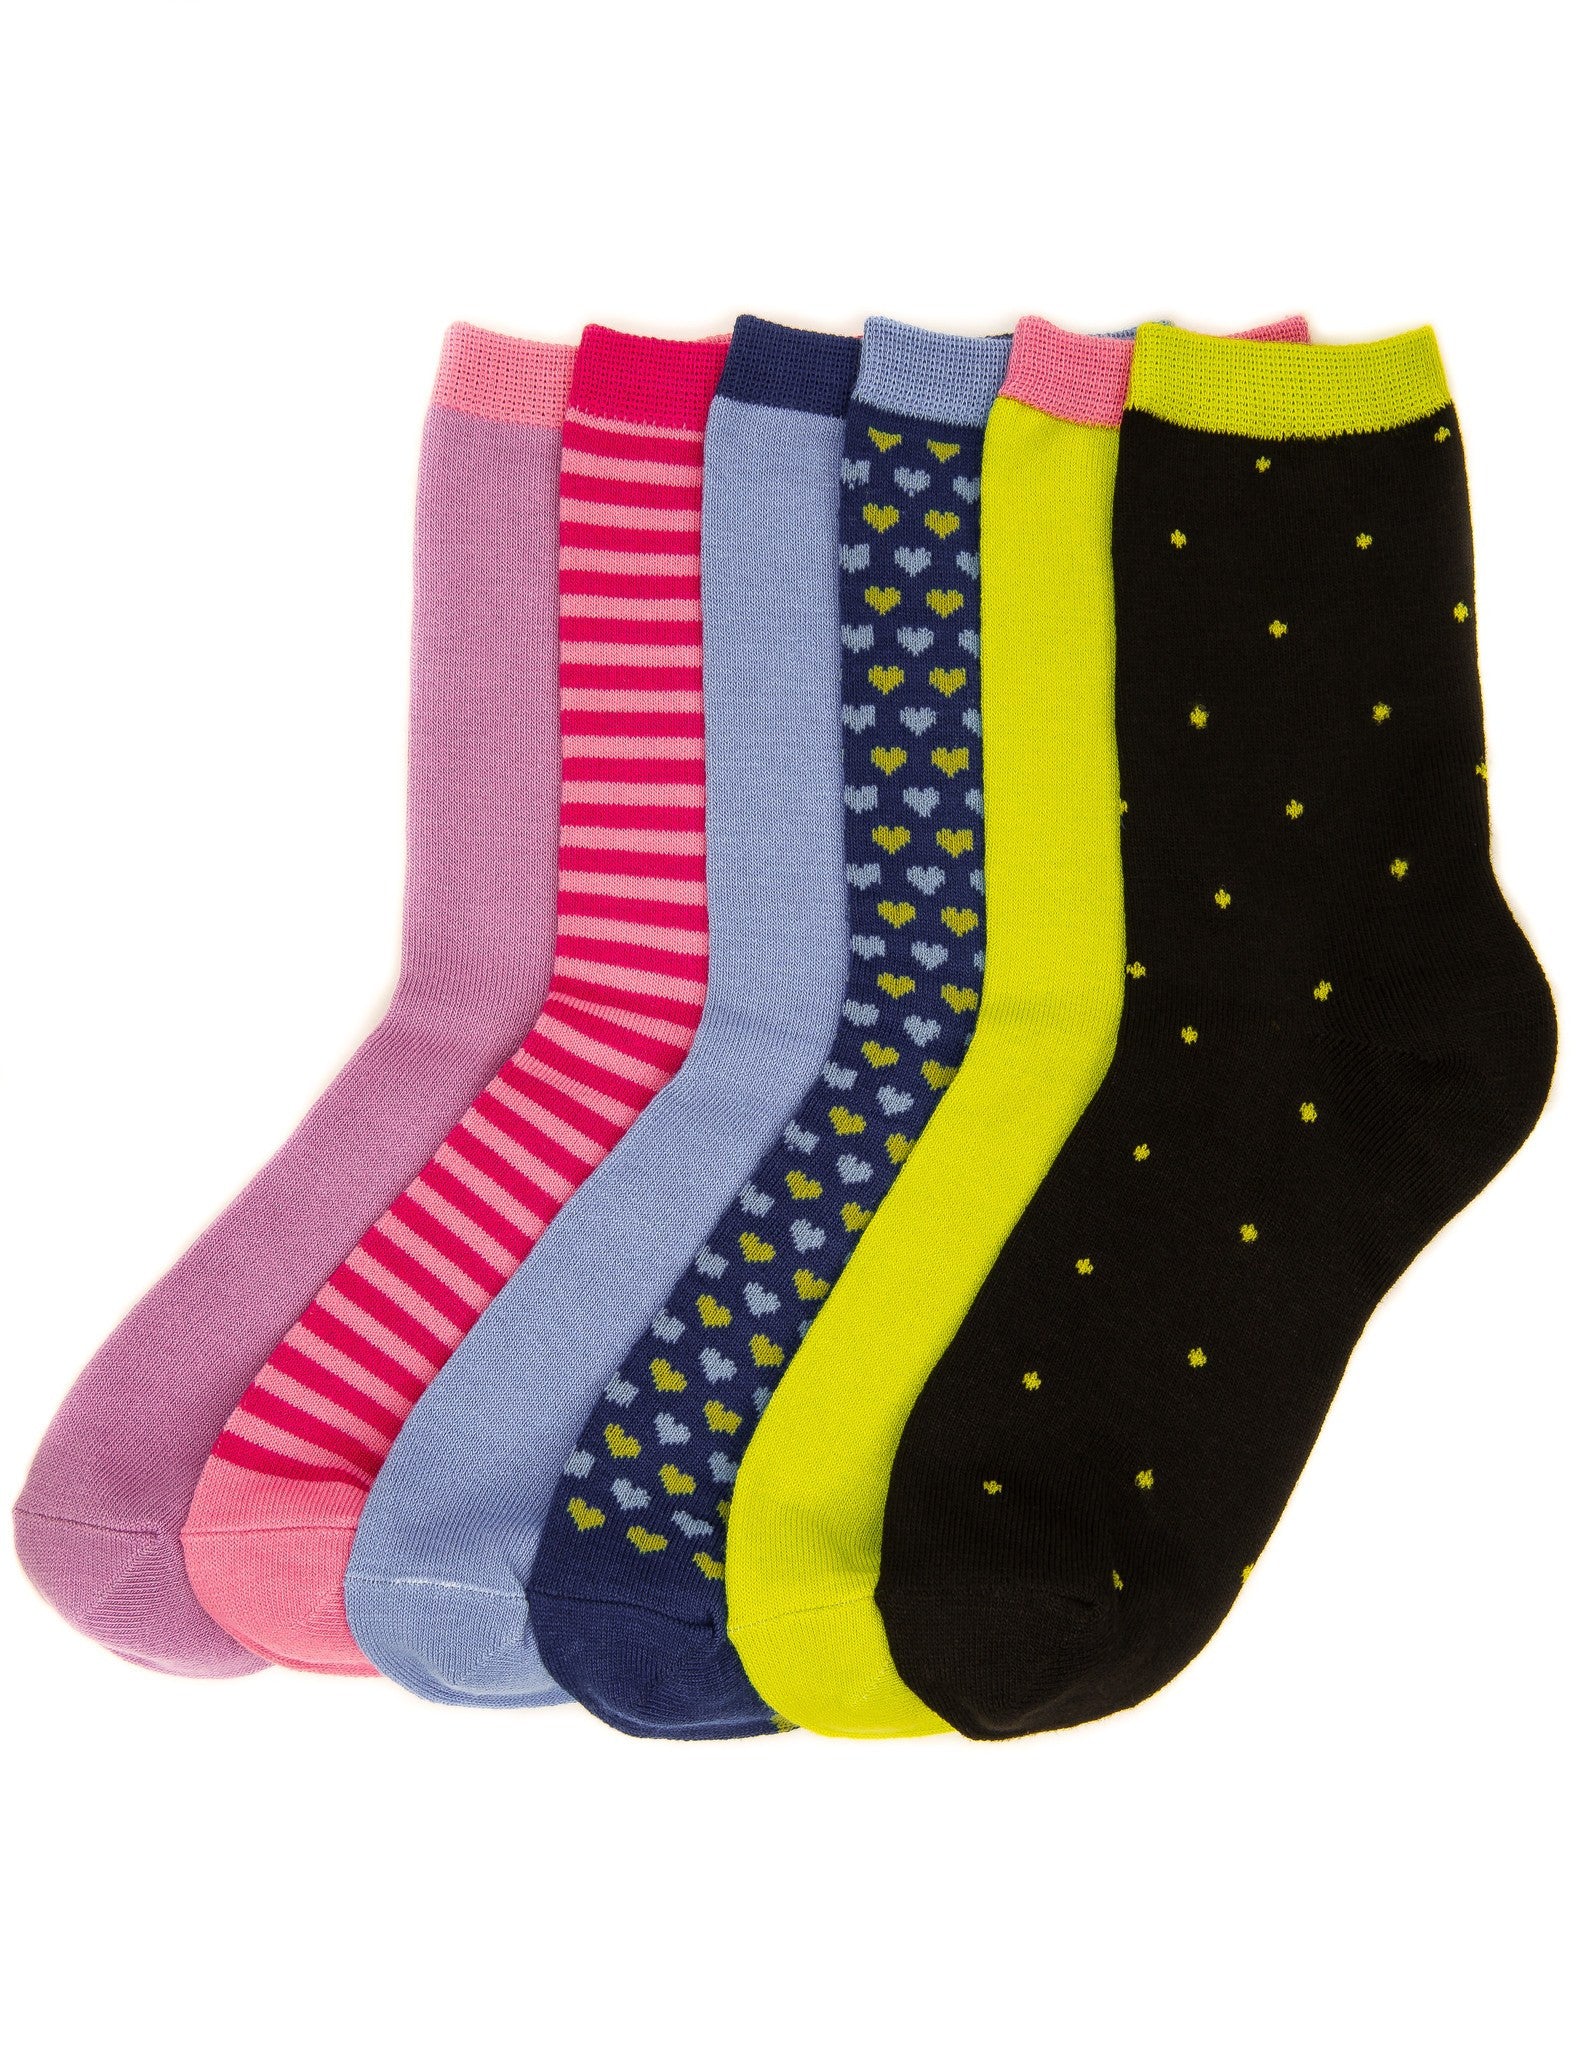 Women's Everyday Crew Socks - 6 Pairs